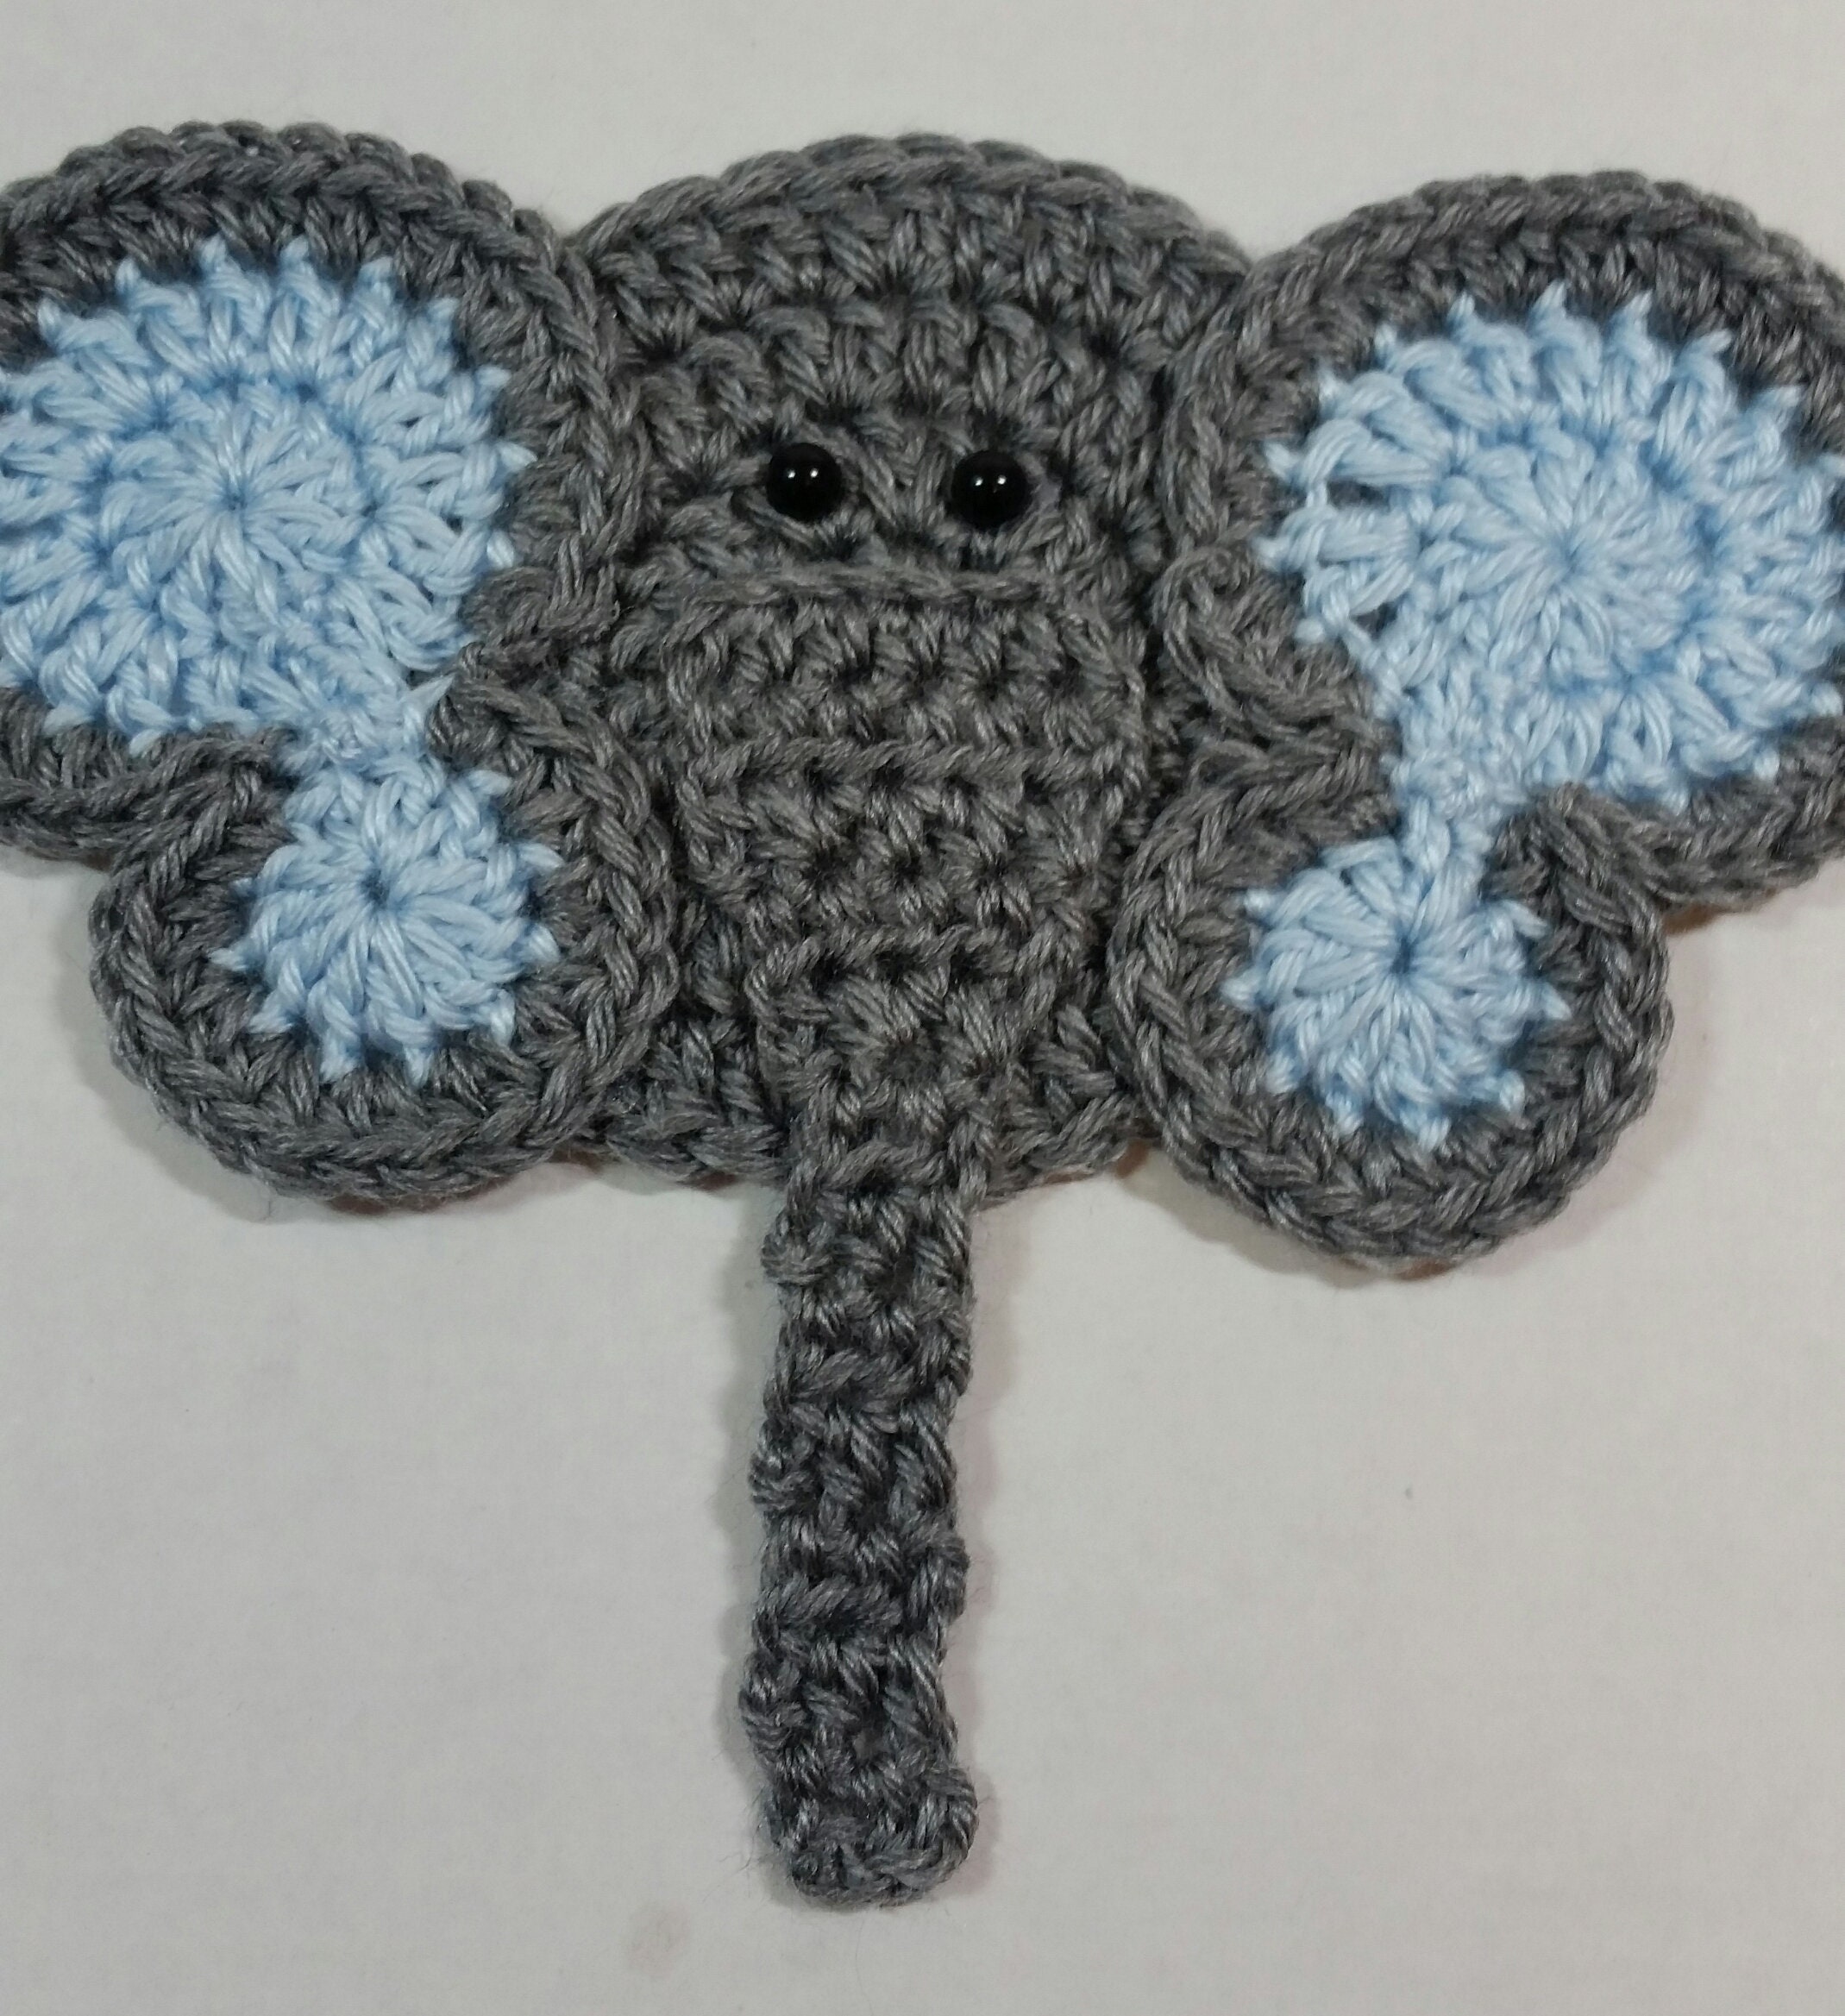 Elephant Head Applique With Light Blue Ears / Crocheted | Etsy